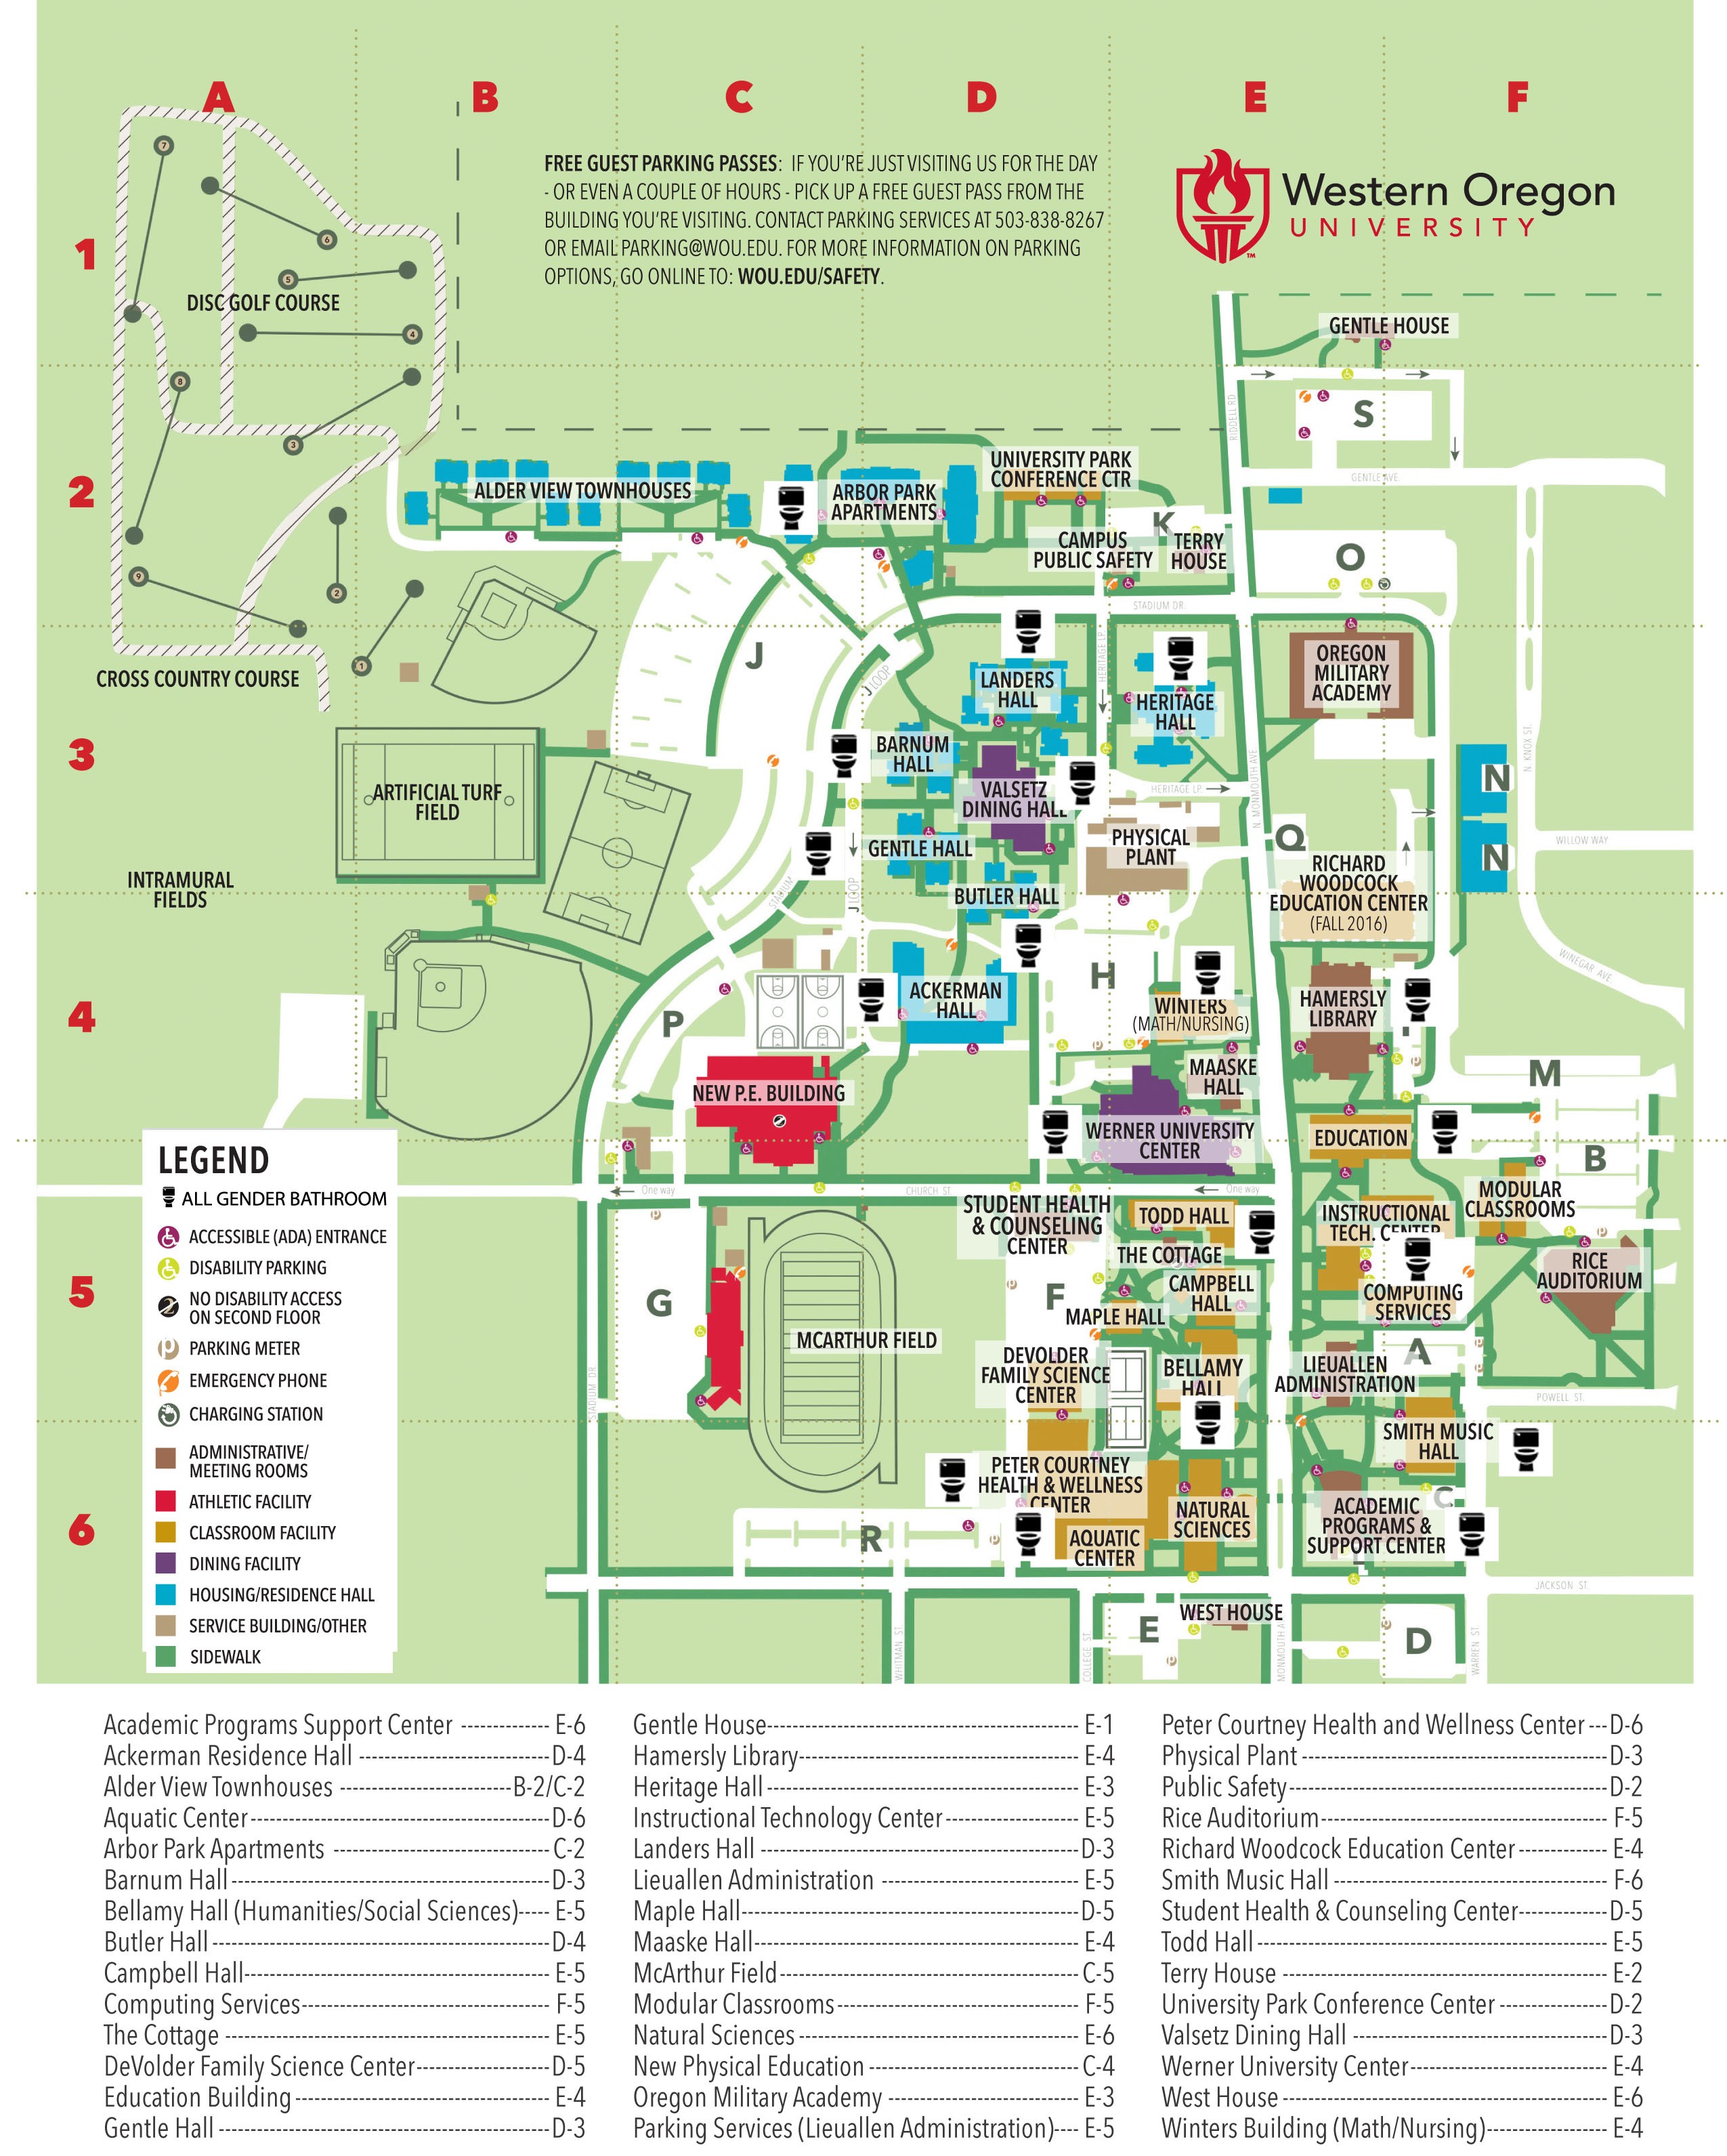 Campus Resources – Safe Zone